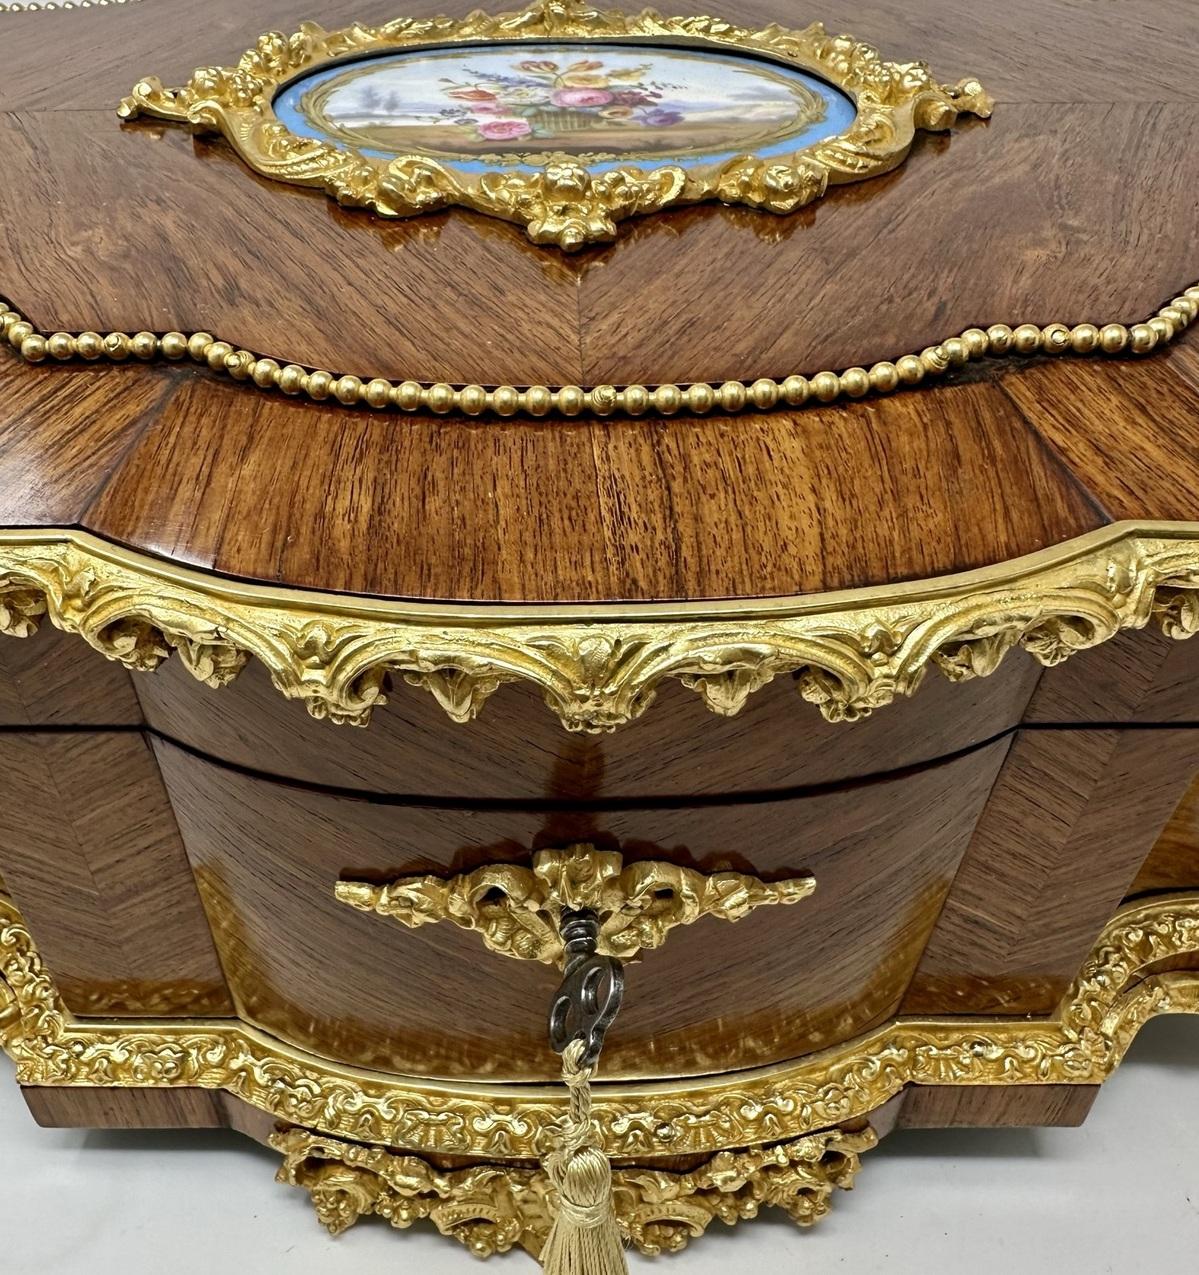 Antique French Ormolu Kingwood Sevres Casket Jewelry Box by Vervelle Audot Paris 1